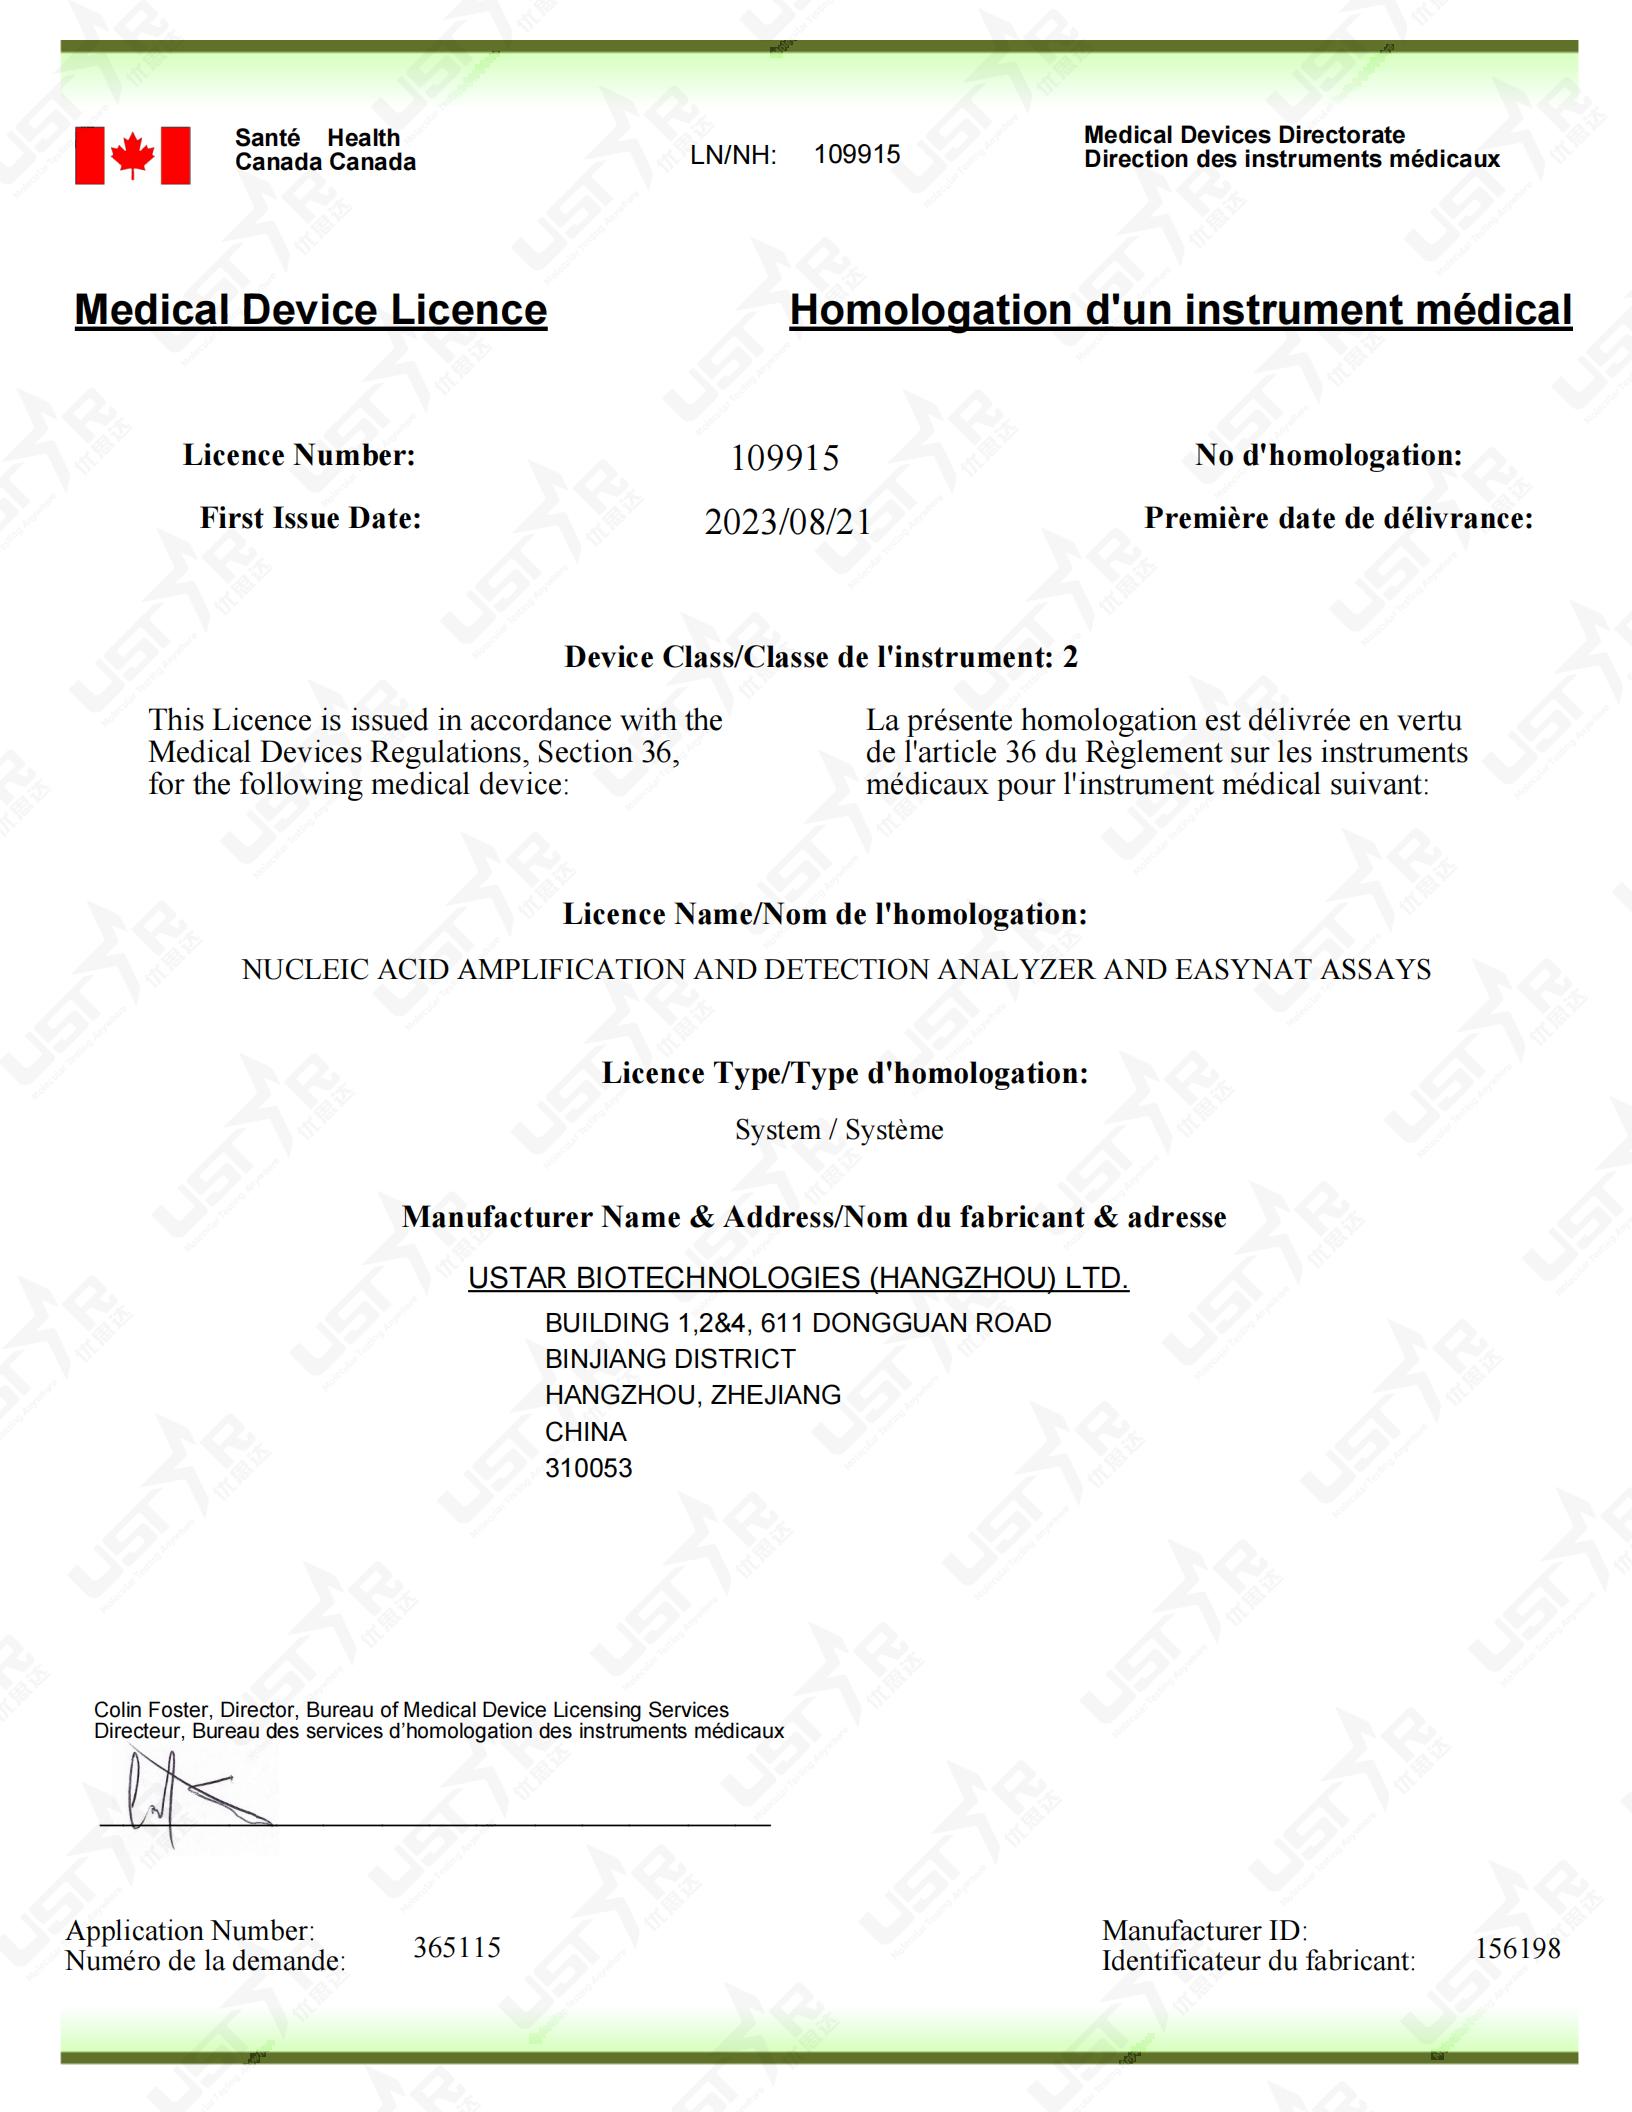 Ustar's Three Tests Obtain Health Canada Medical Device Licence